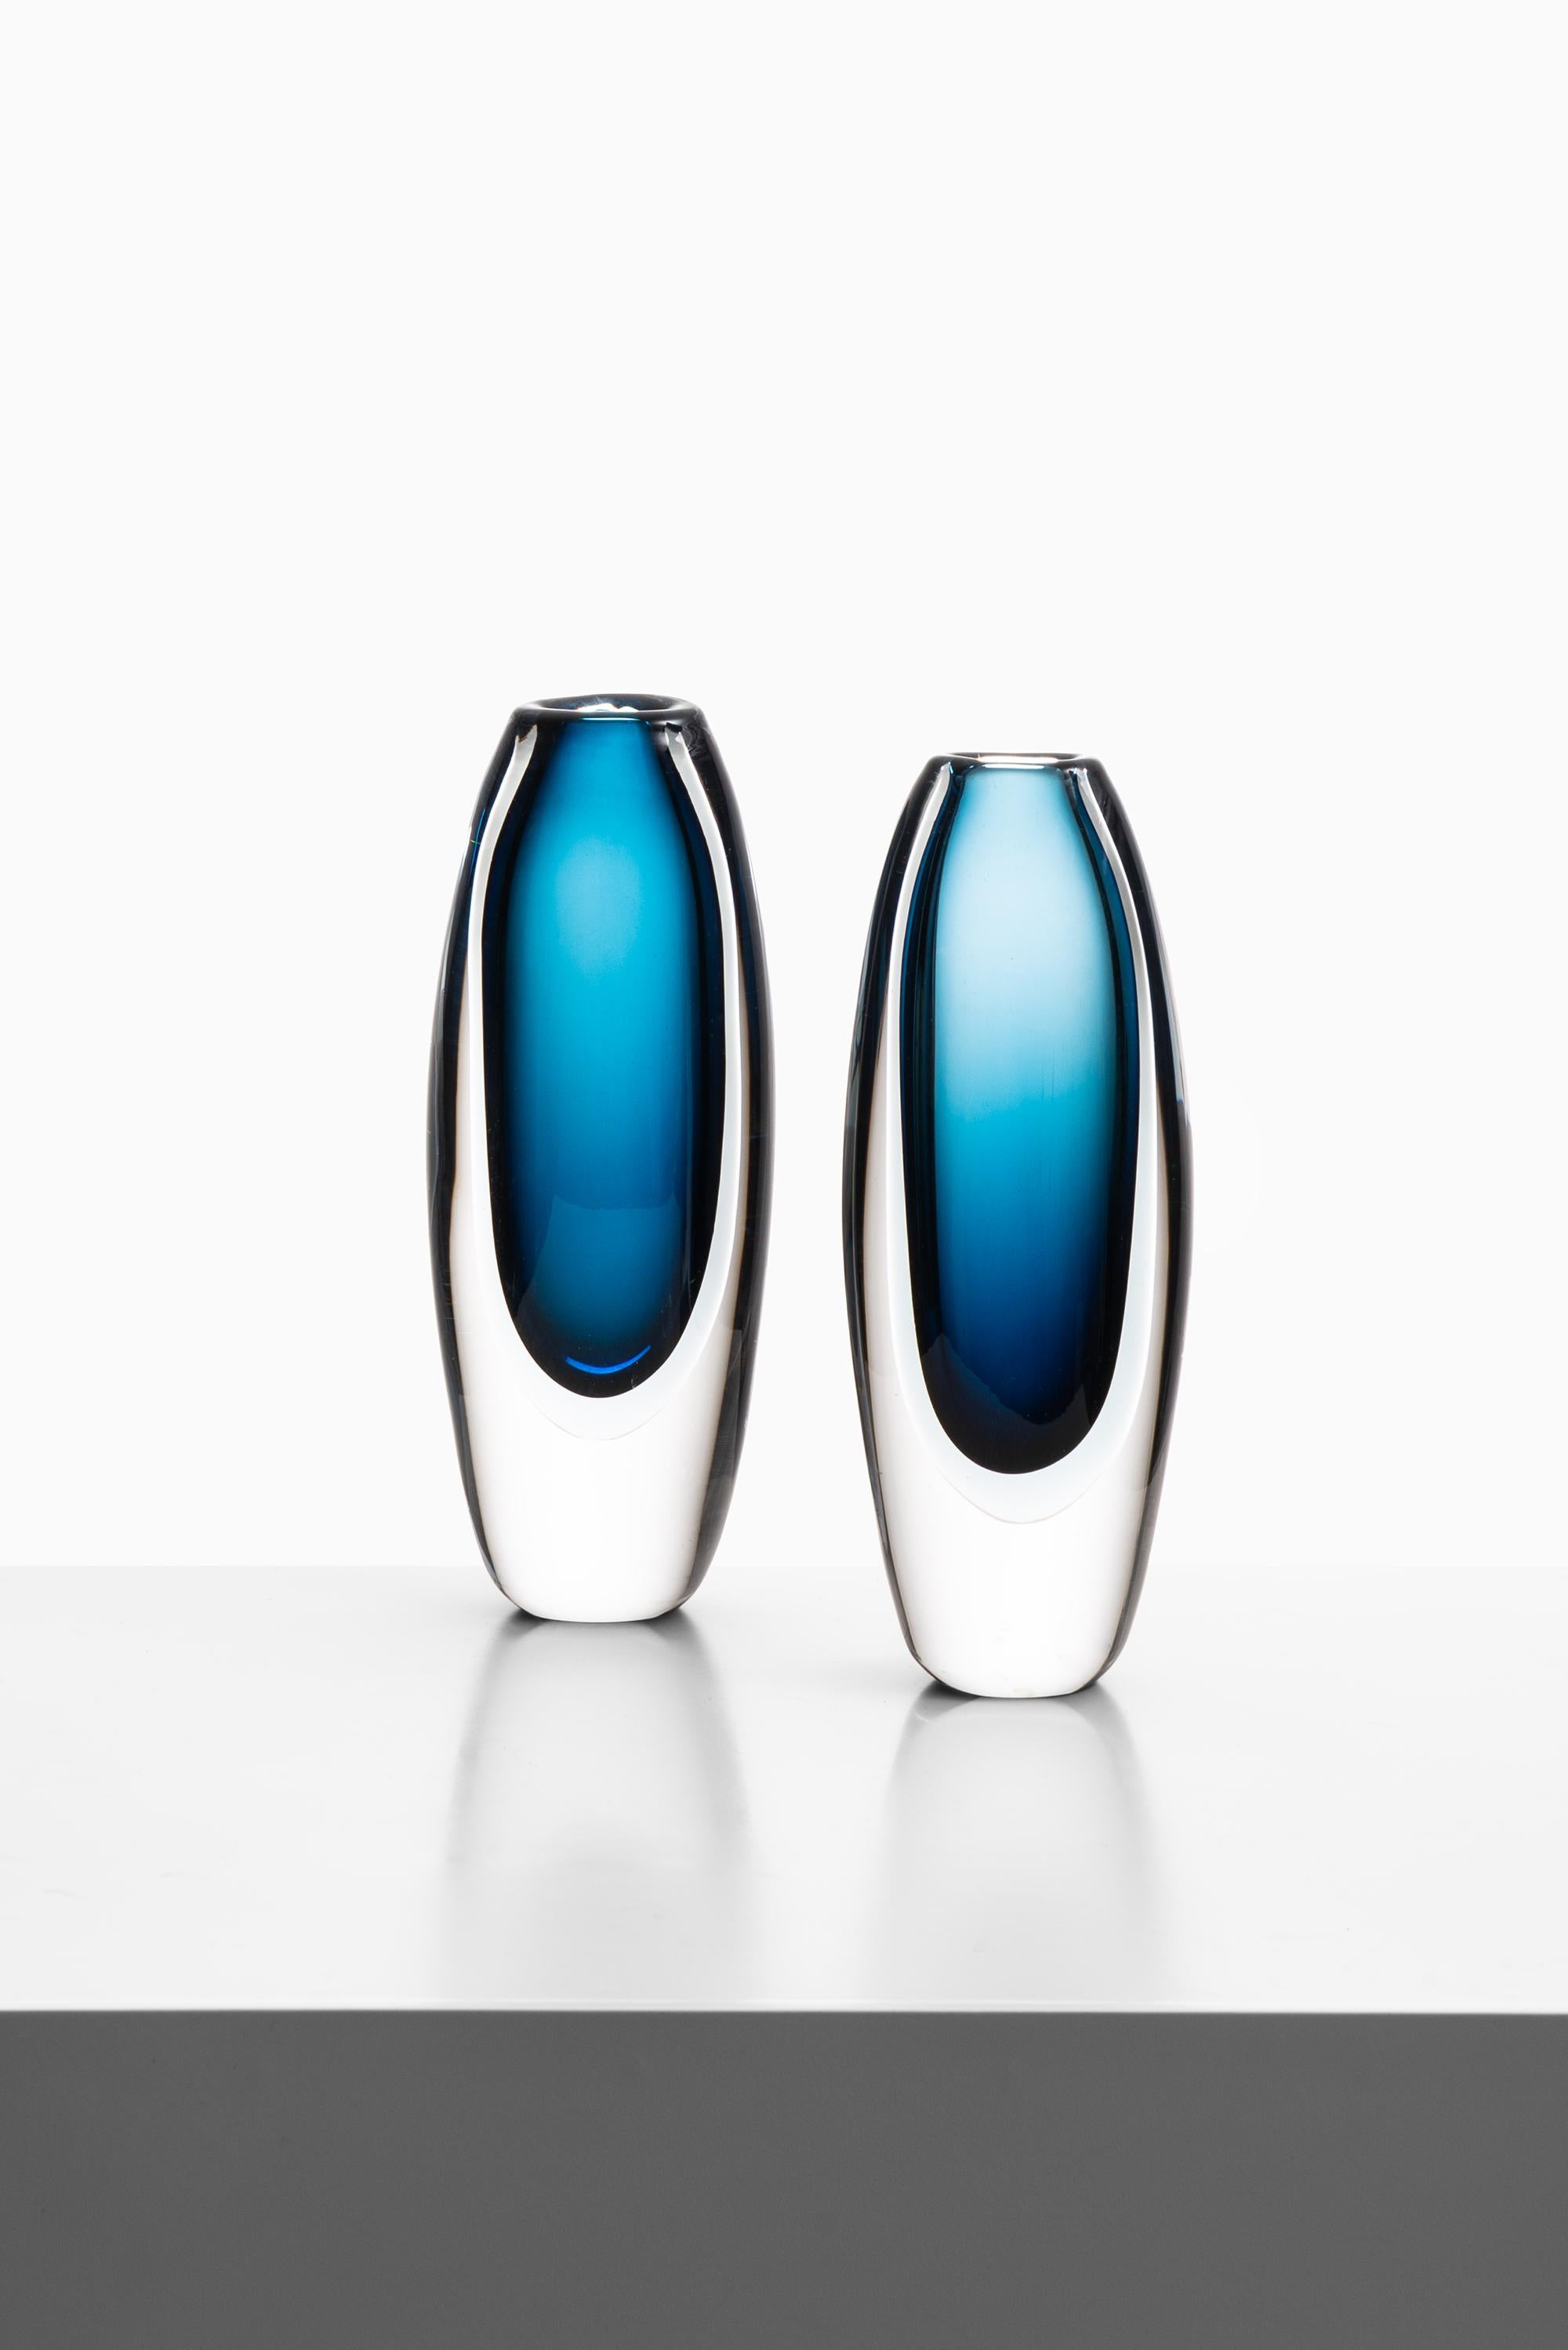 Pair of glass vases designed by Vicke Lindstrand. Produced by Kosta in Sweden. Signed ‘Kosta 01828 VL'.